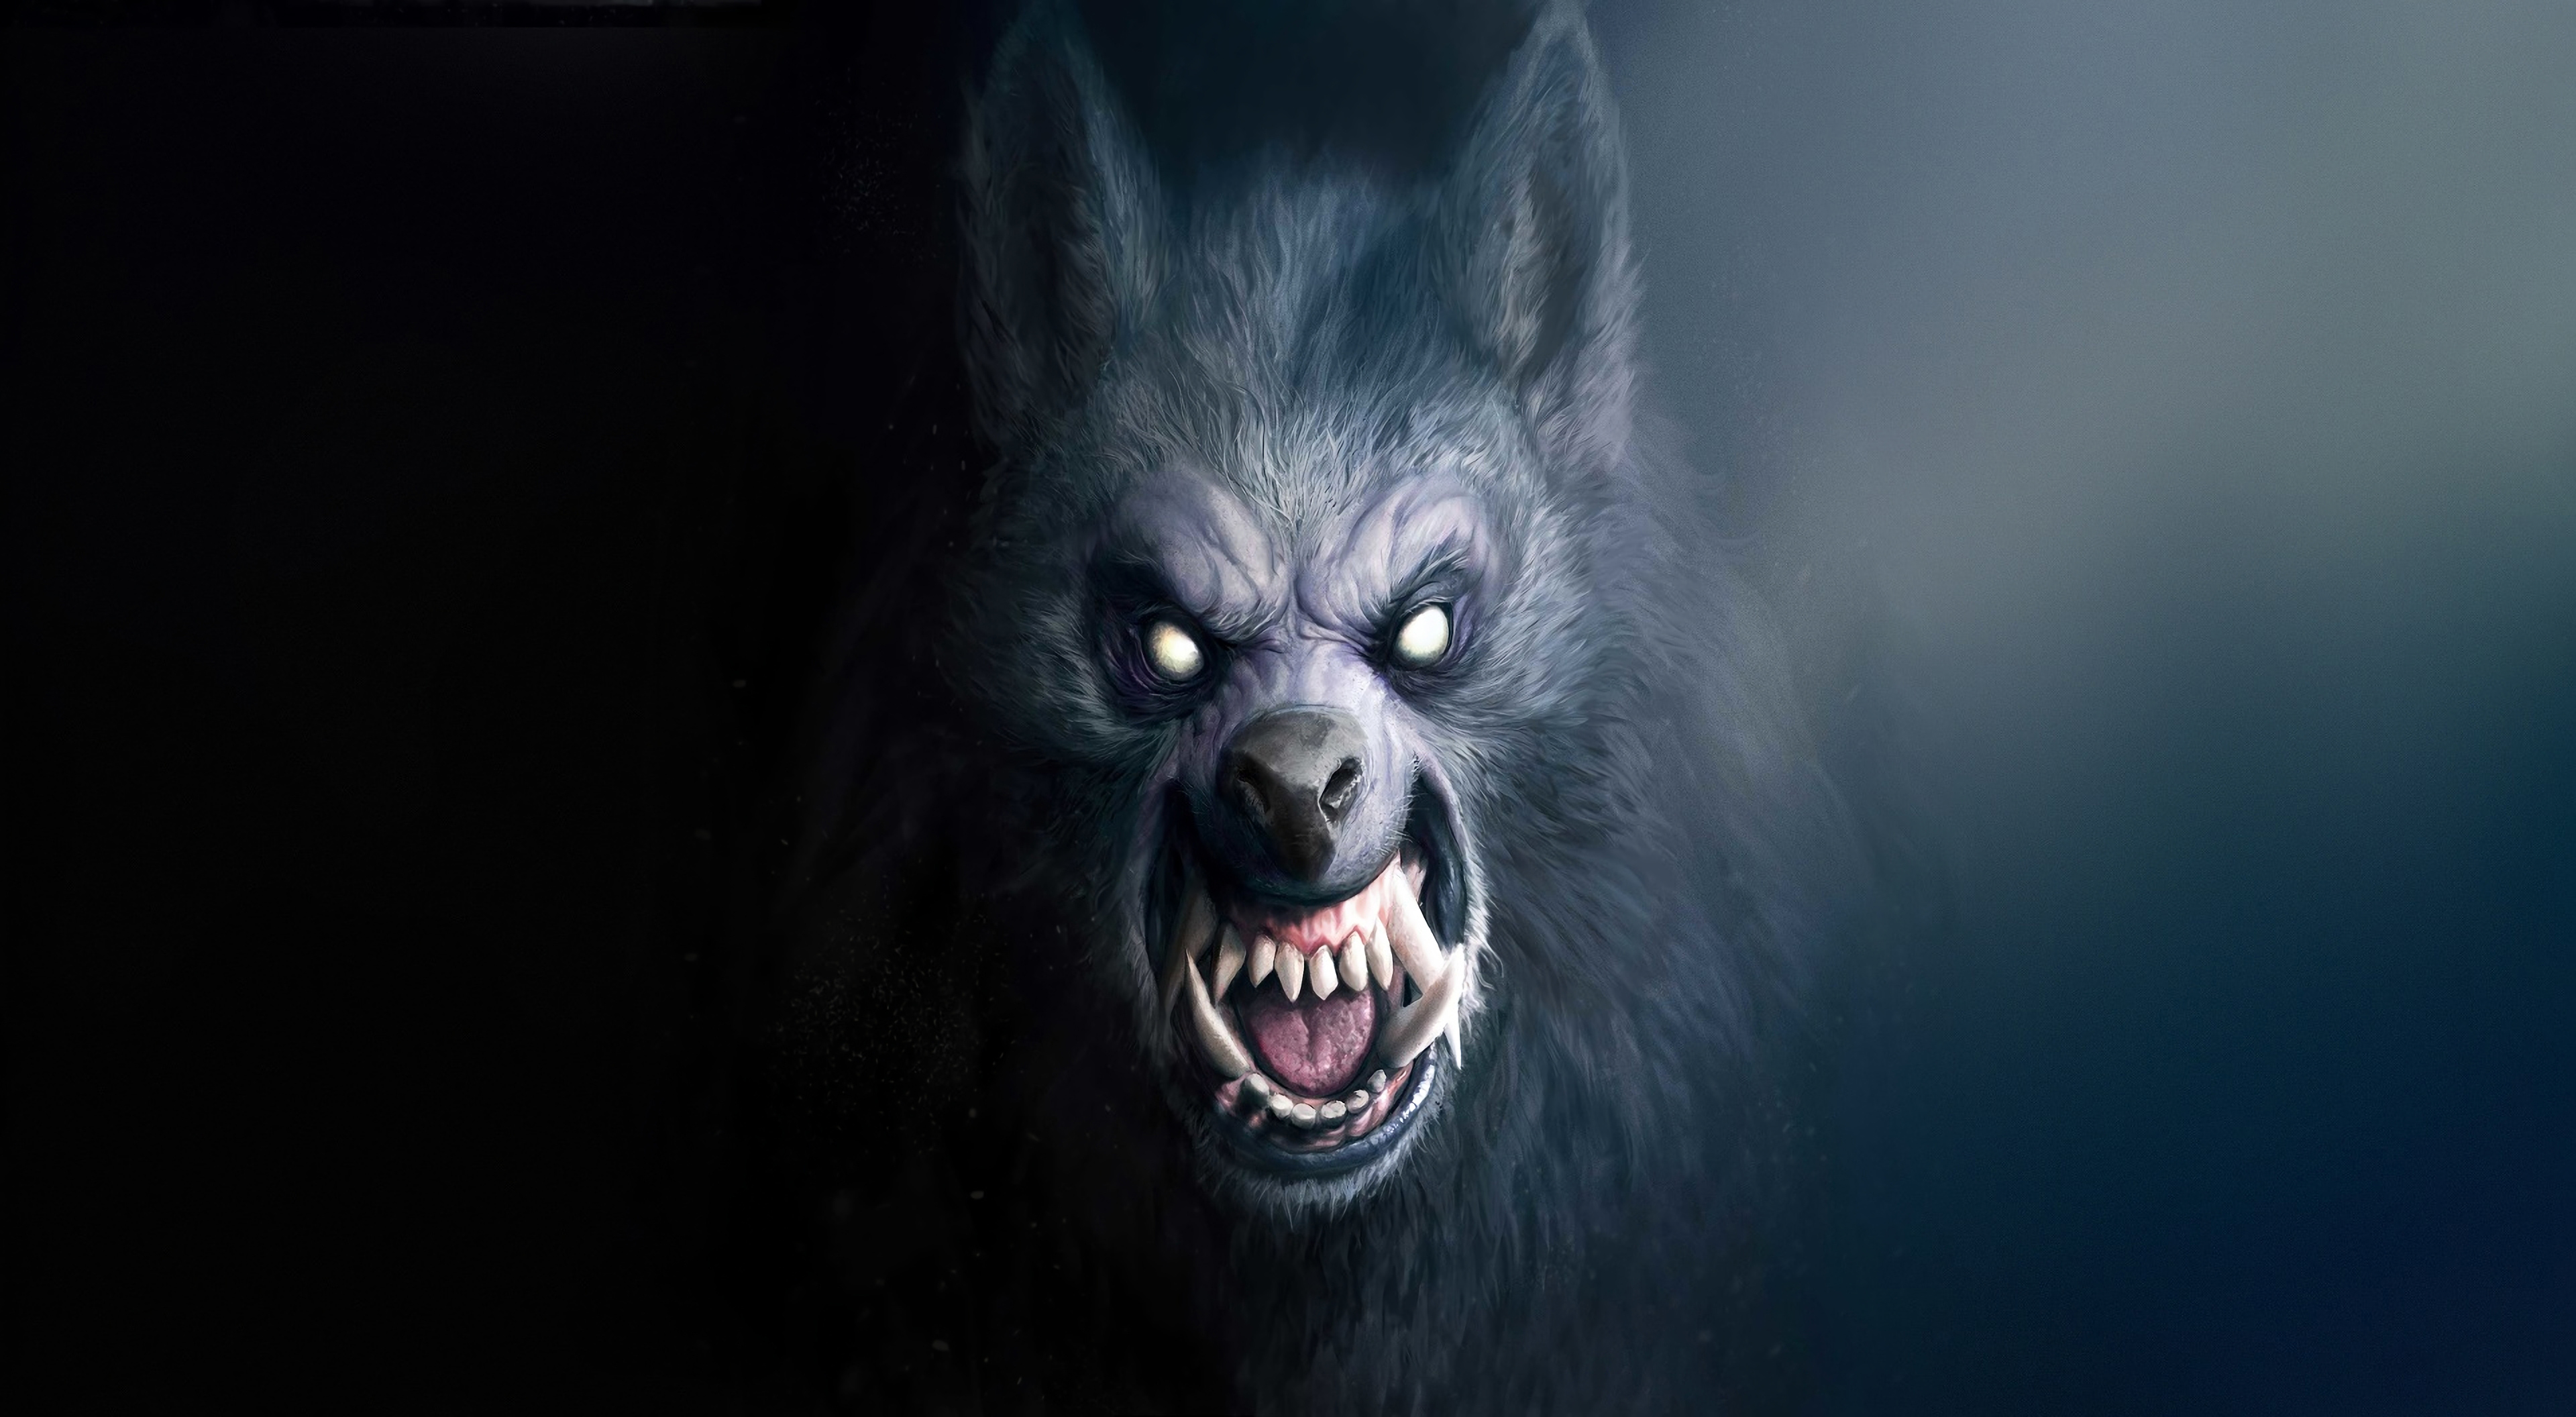 Werewolf Wallpaper 4k Hd